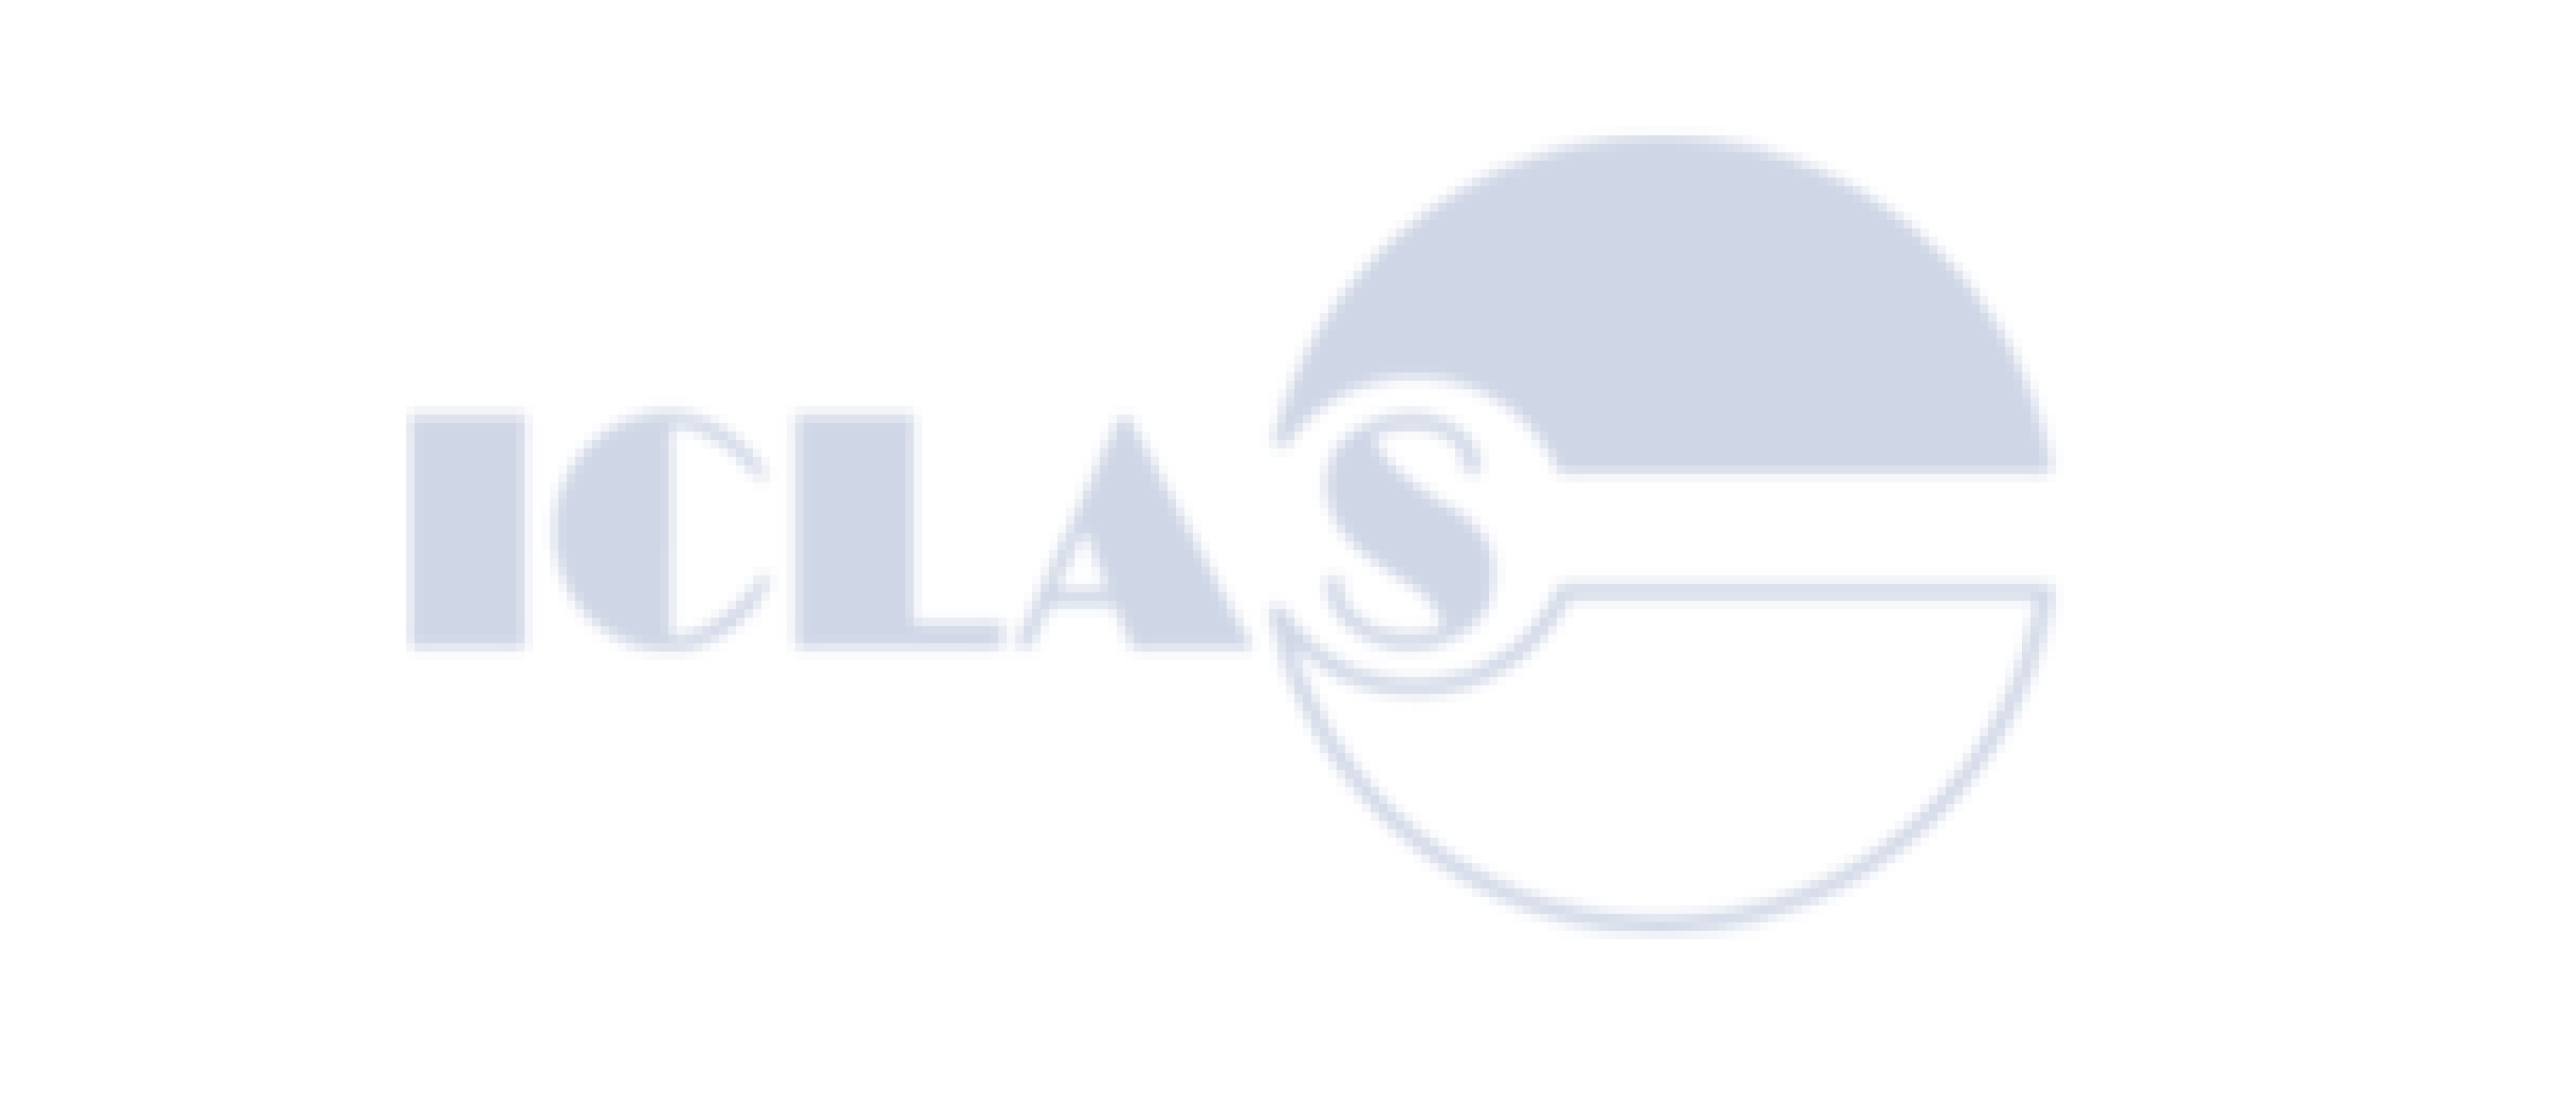 ICLAS News Report January 2022